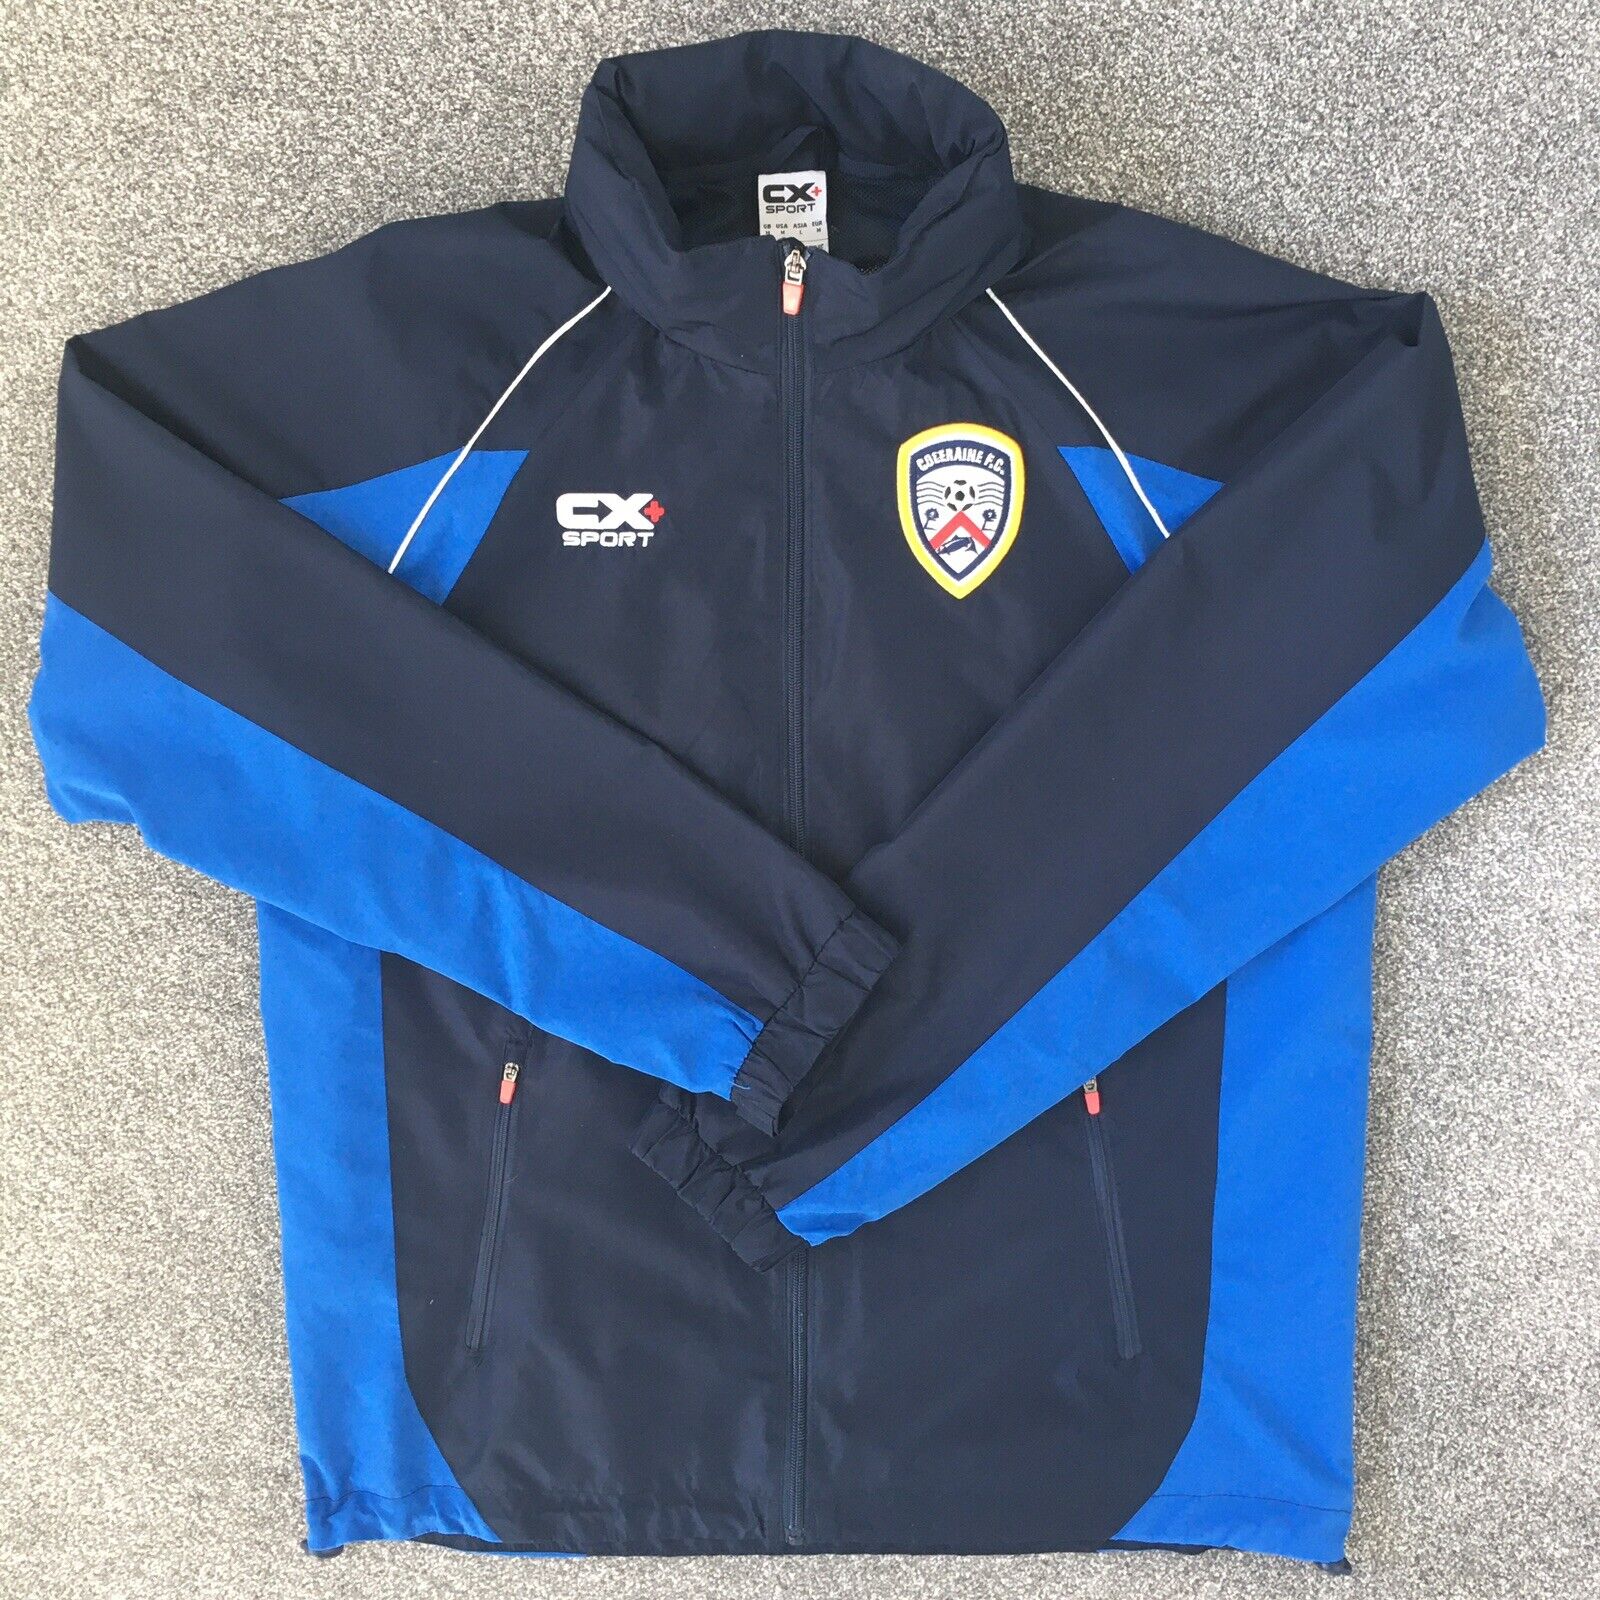 Coleraine Football Training Jacket Mens Medium Blue CX+ Sport Full Zip Excellent